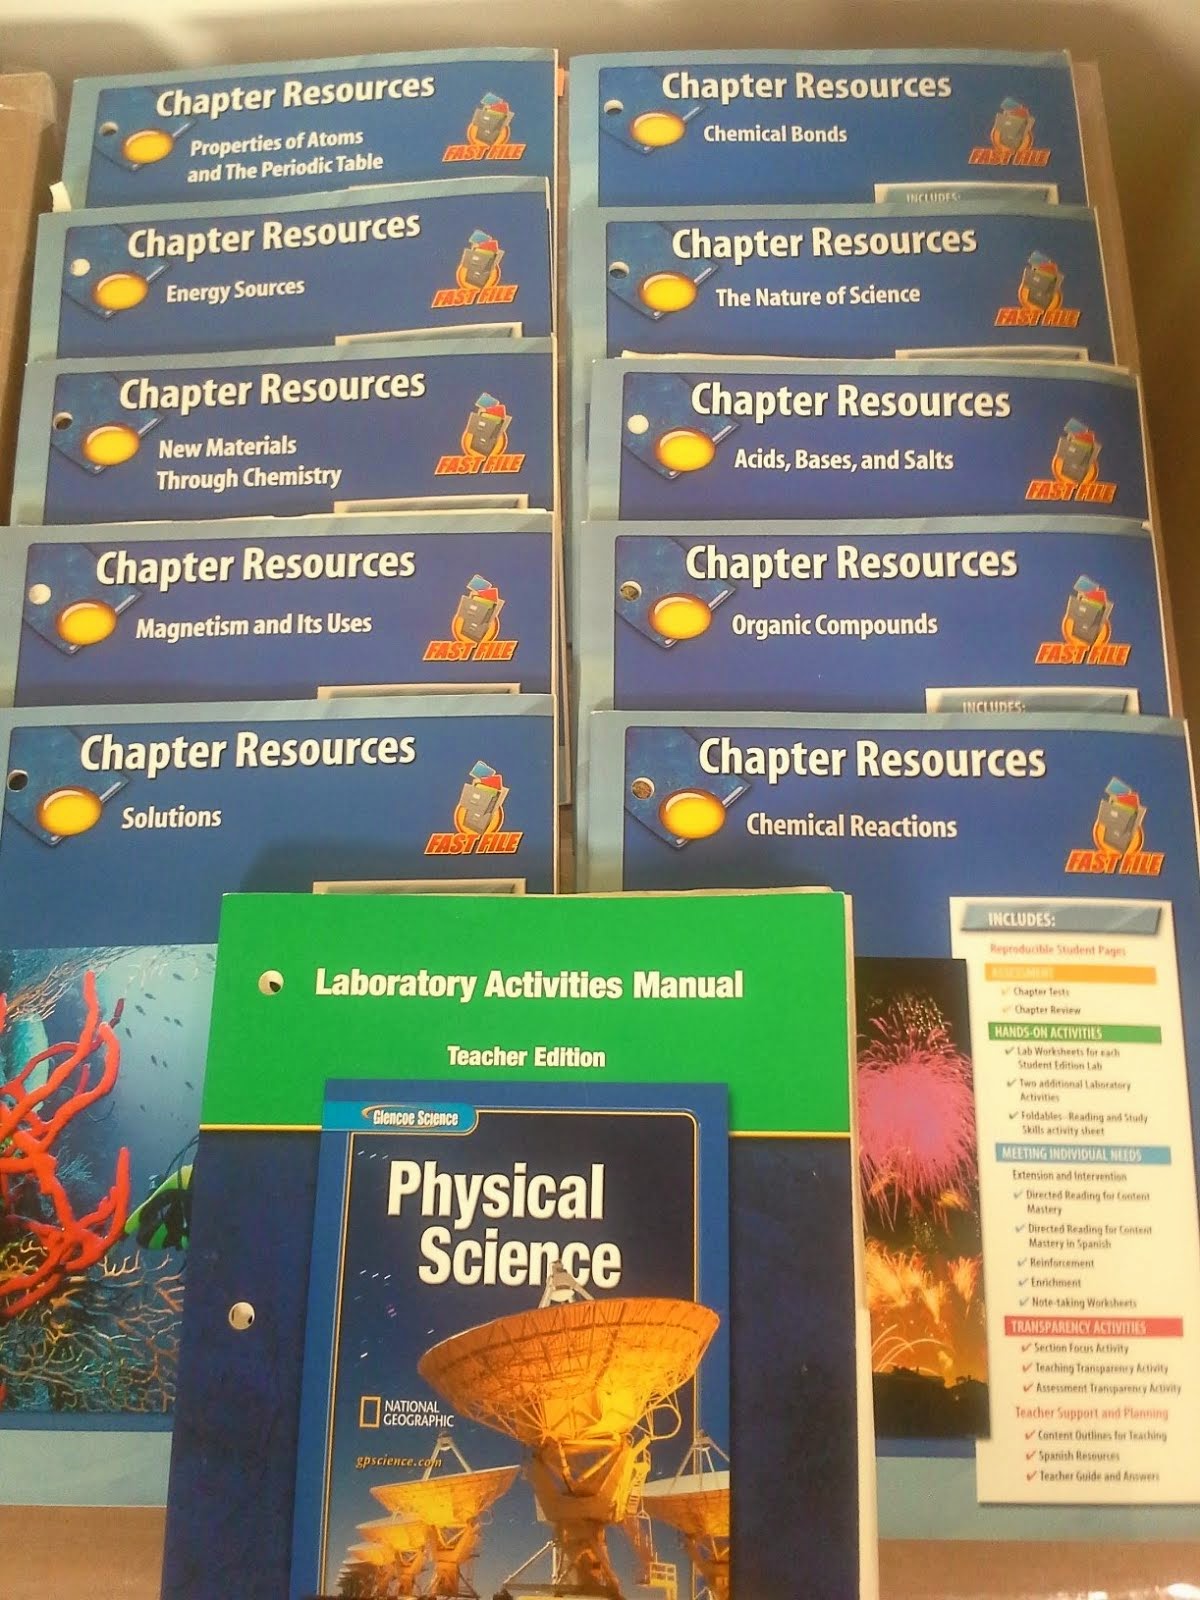 Science, Laboratory Activities Manual